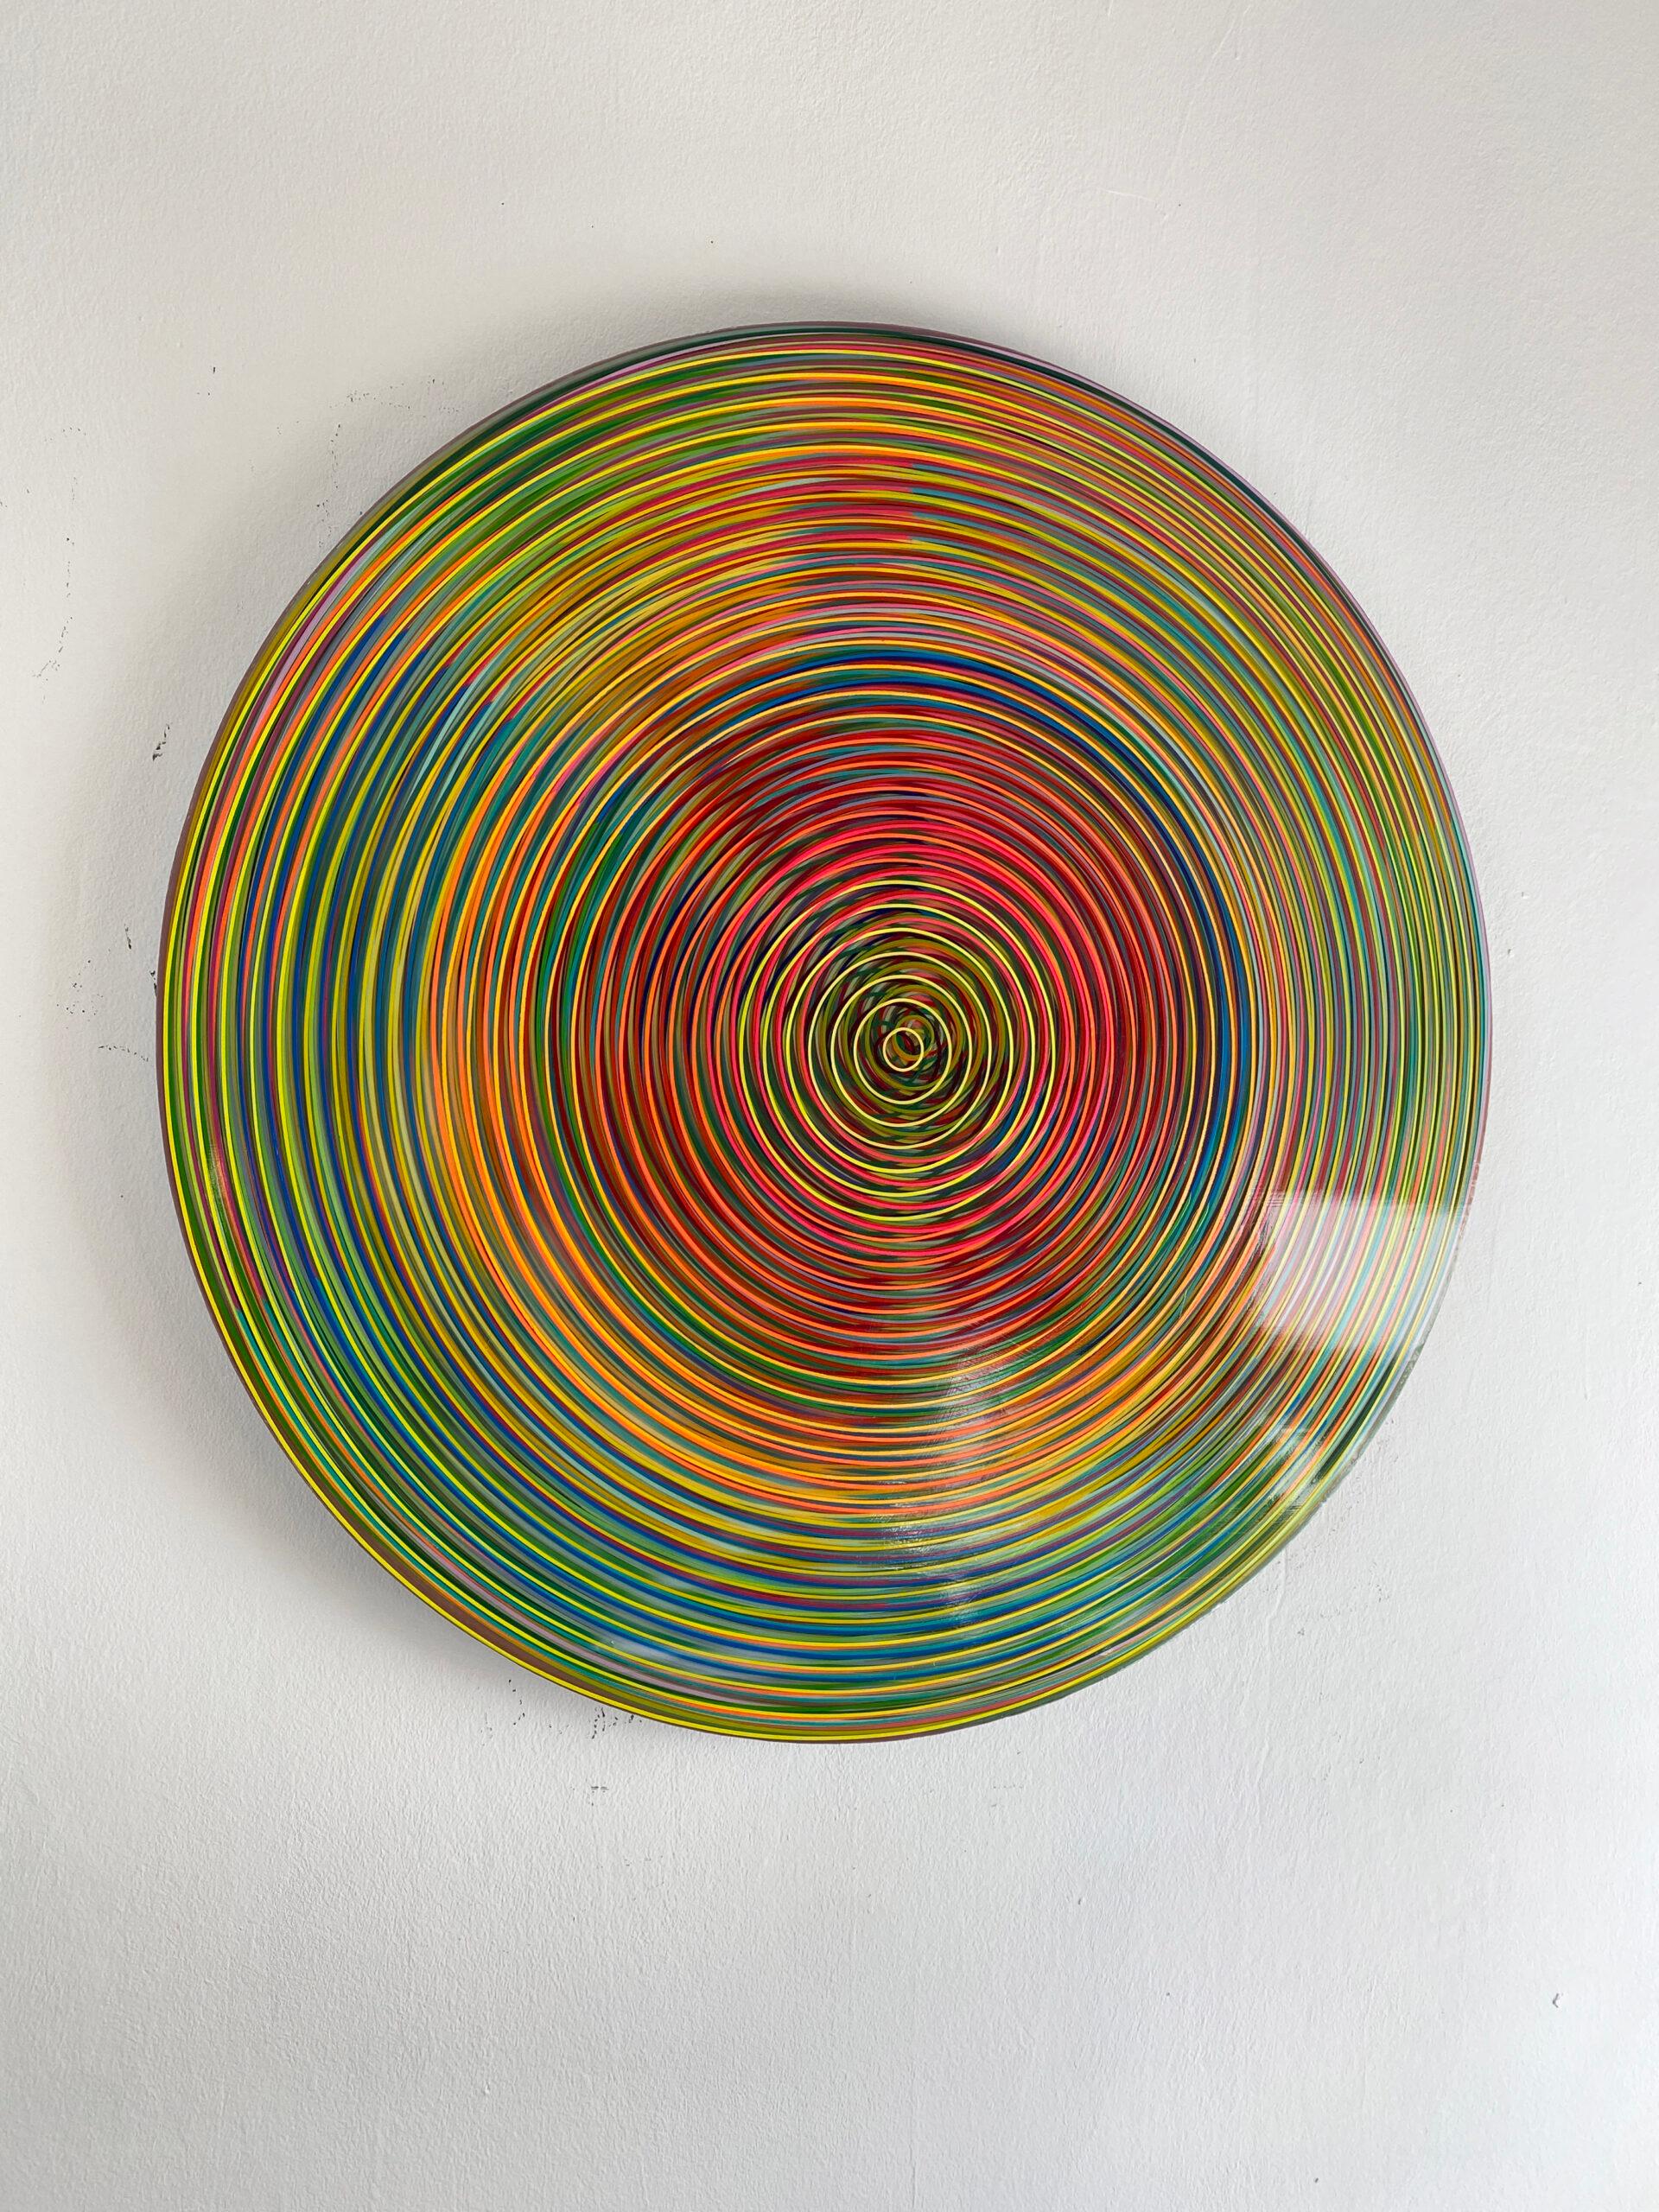 Restrained Supersaturation n°19 par Ahn Hyun-Ju - Peinture abstraite, cercle